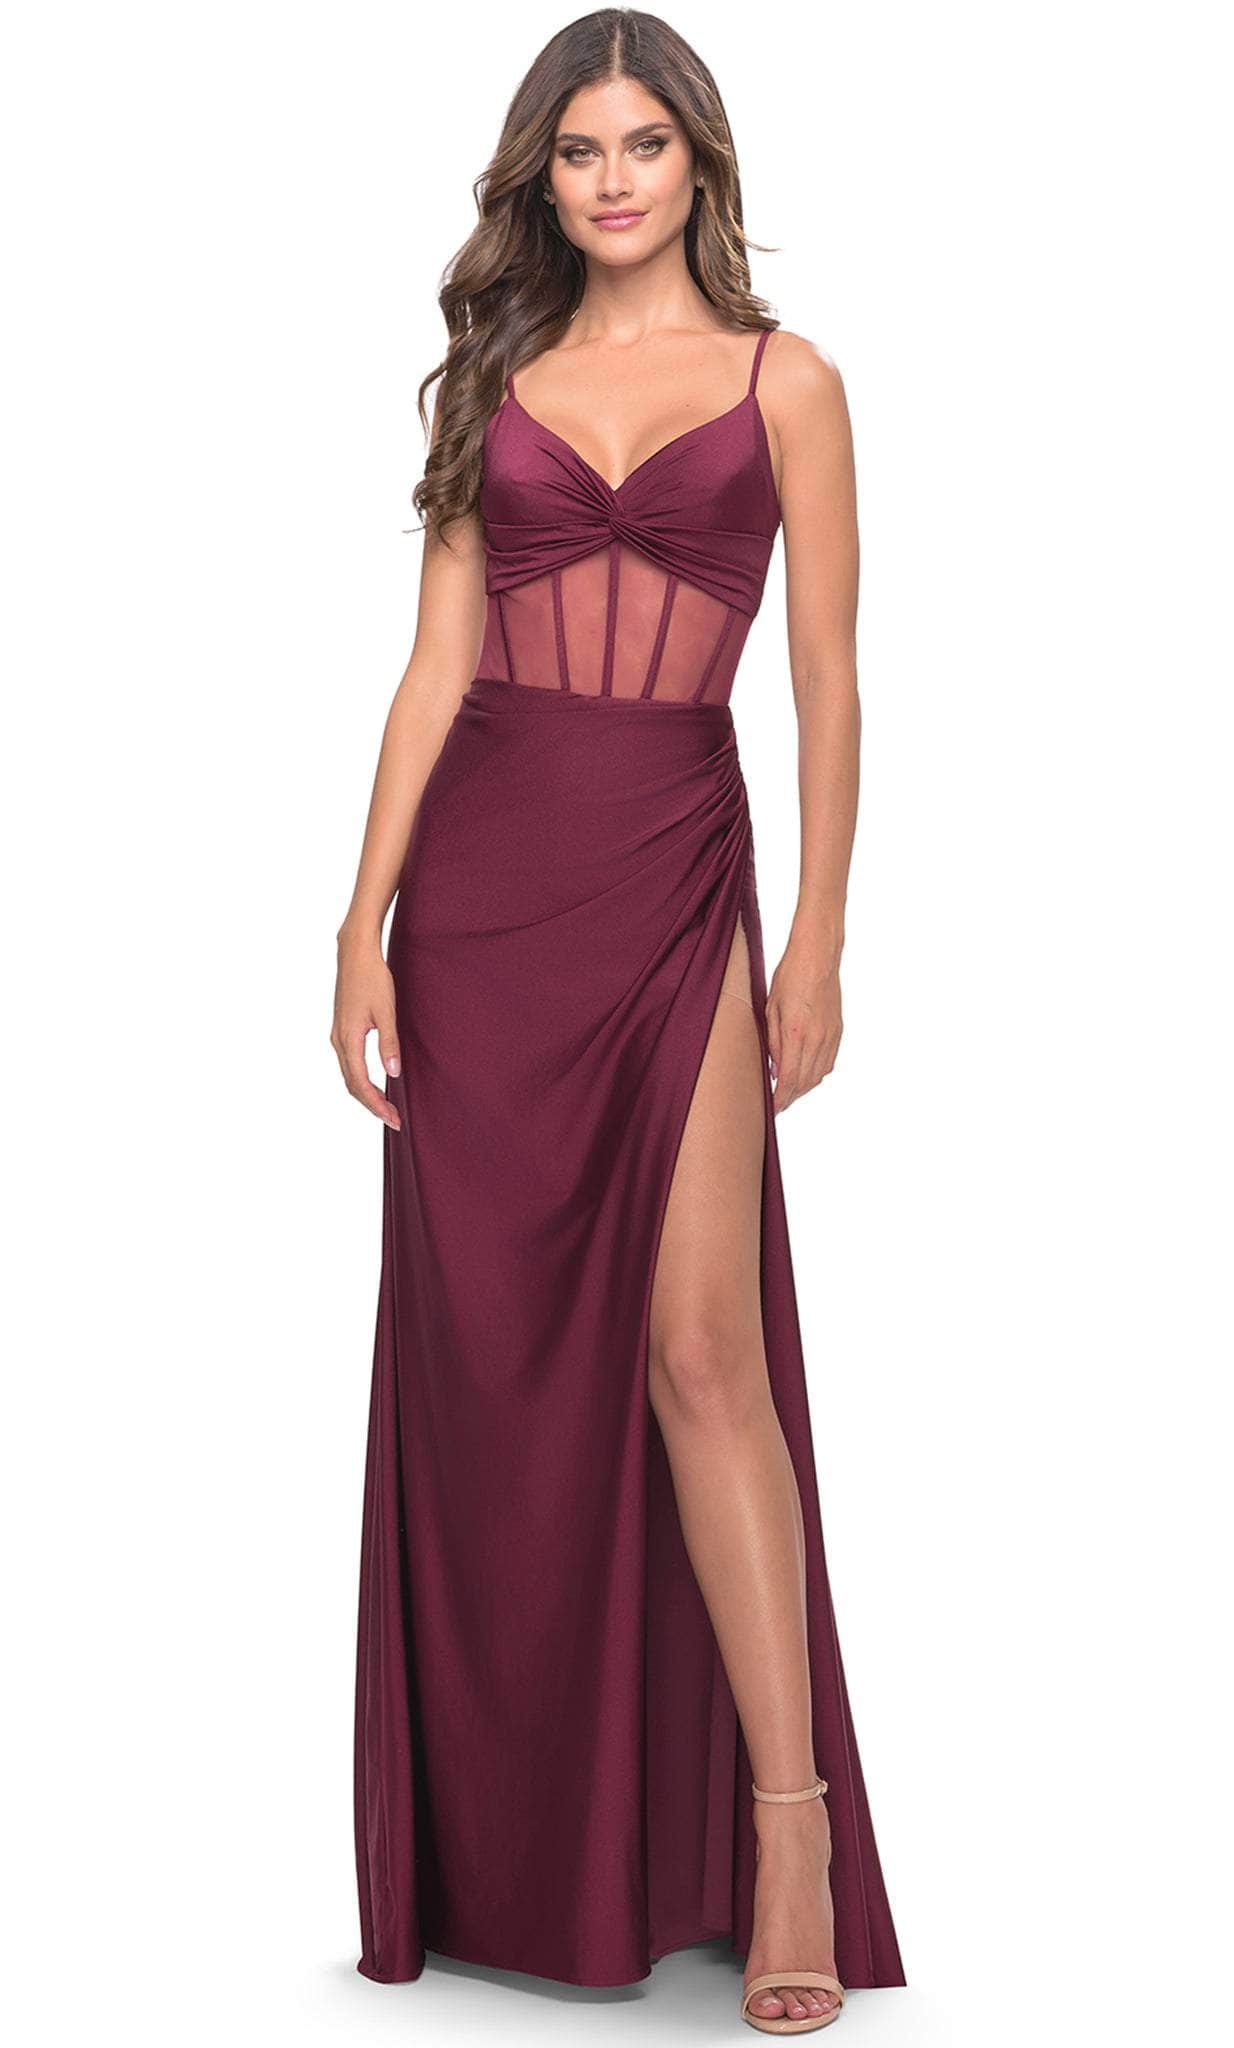 La Femme 31229 - High Slit Dress